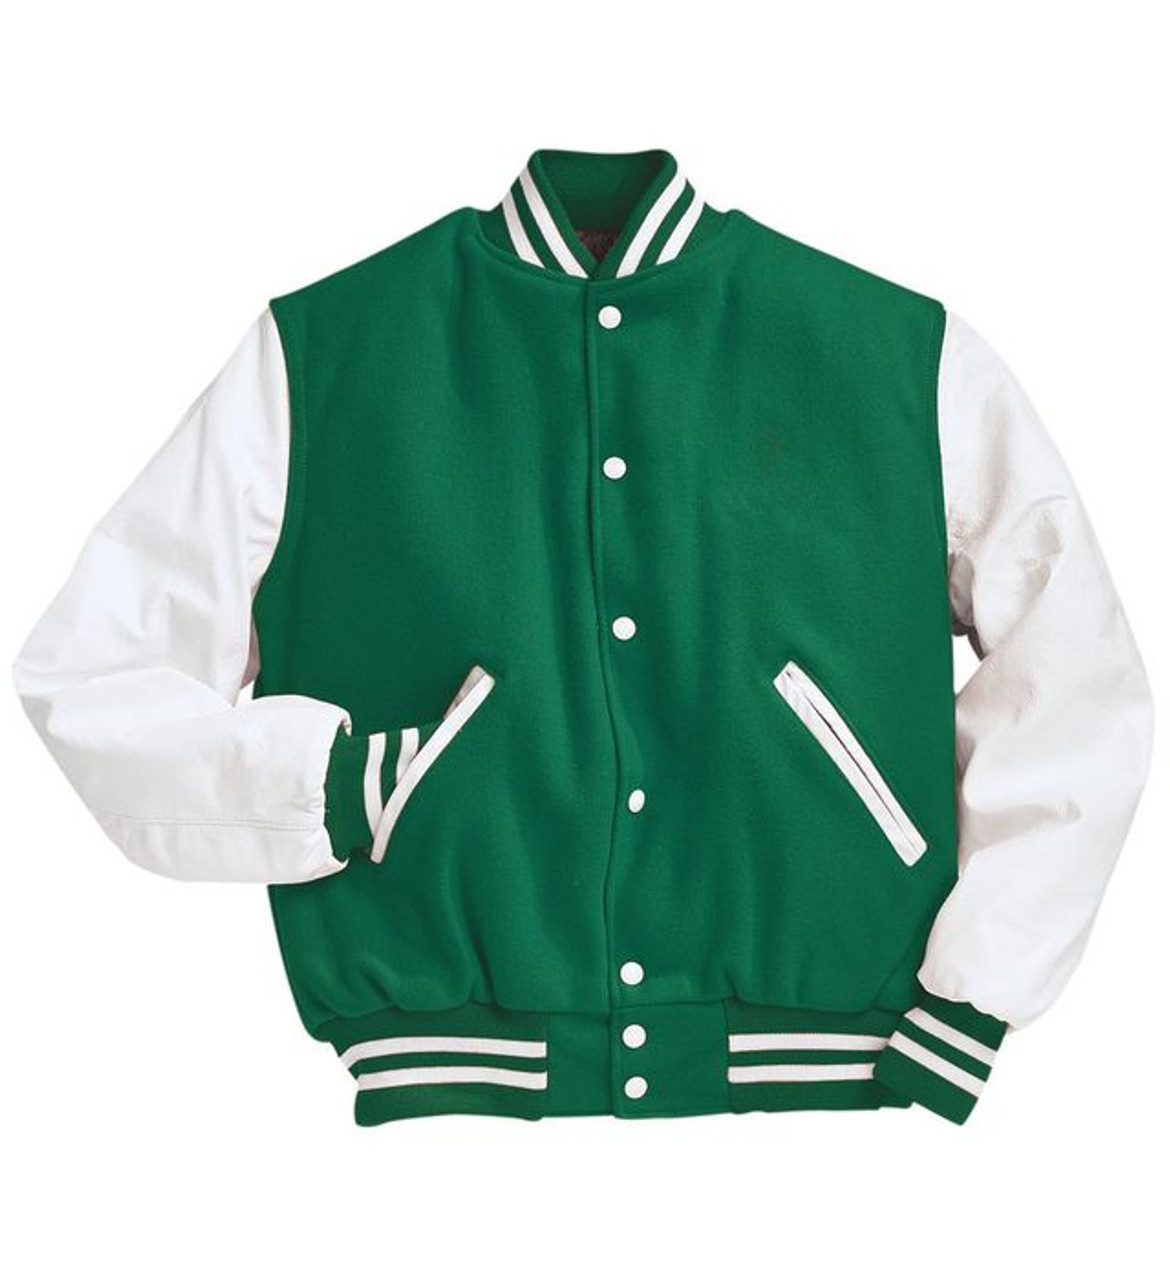 ililily Varsity Jacket American Baseball Club College School Jacket, Green,  X-Large (Asian 2XL)